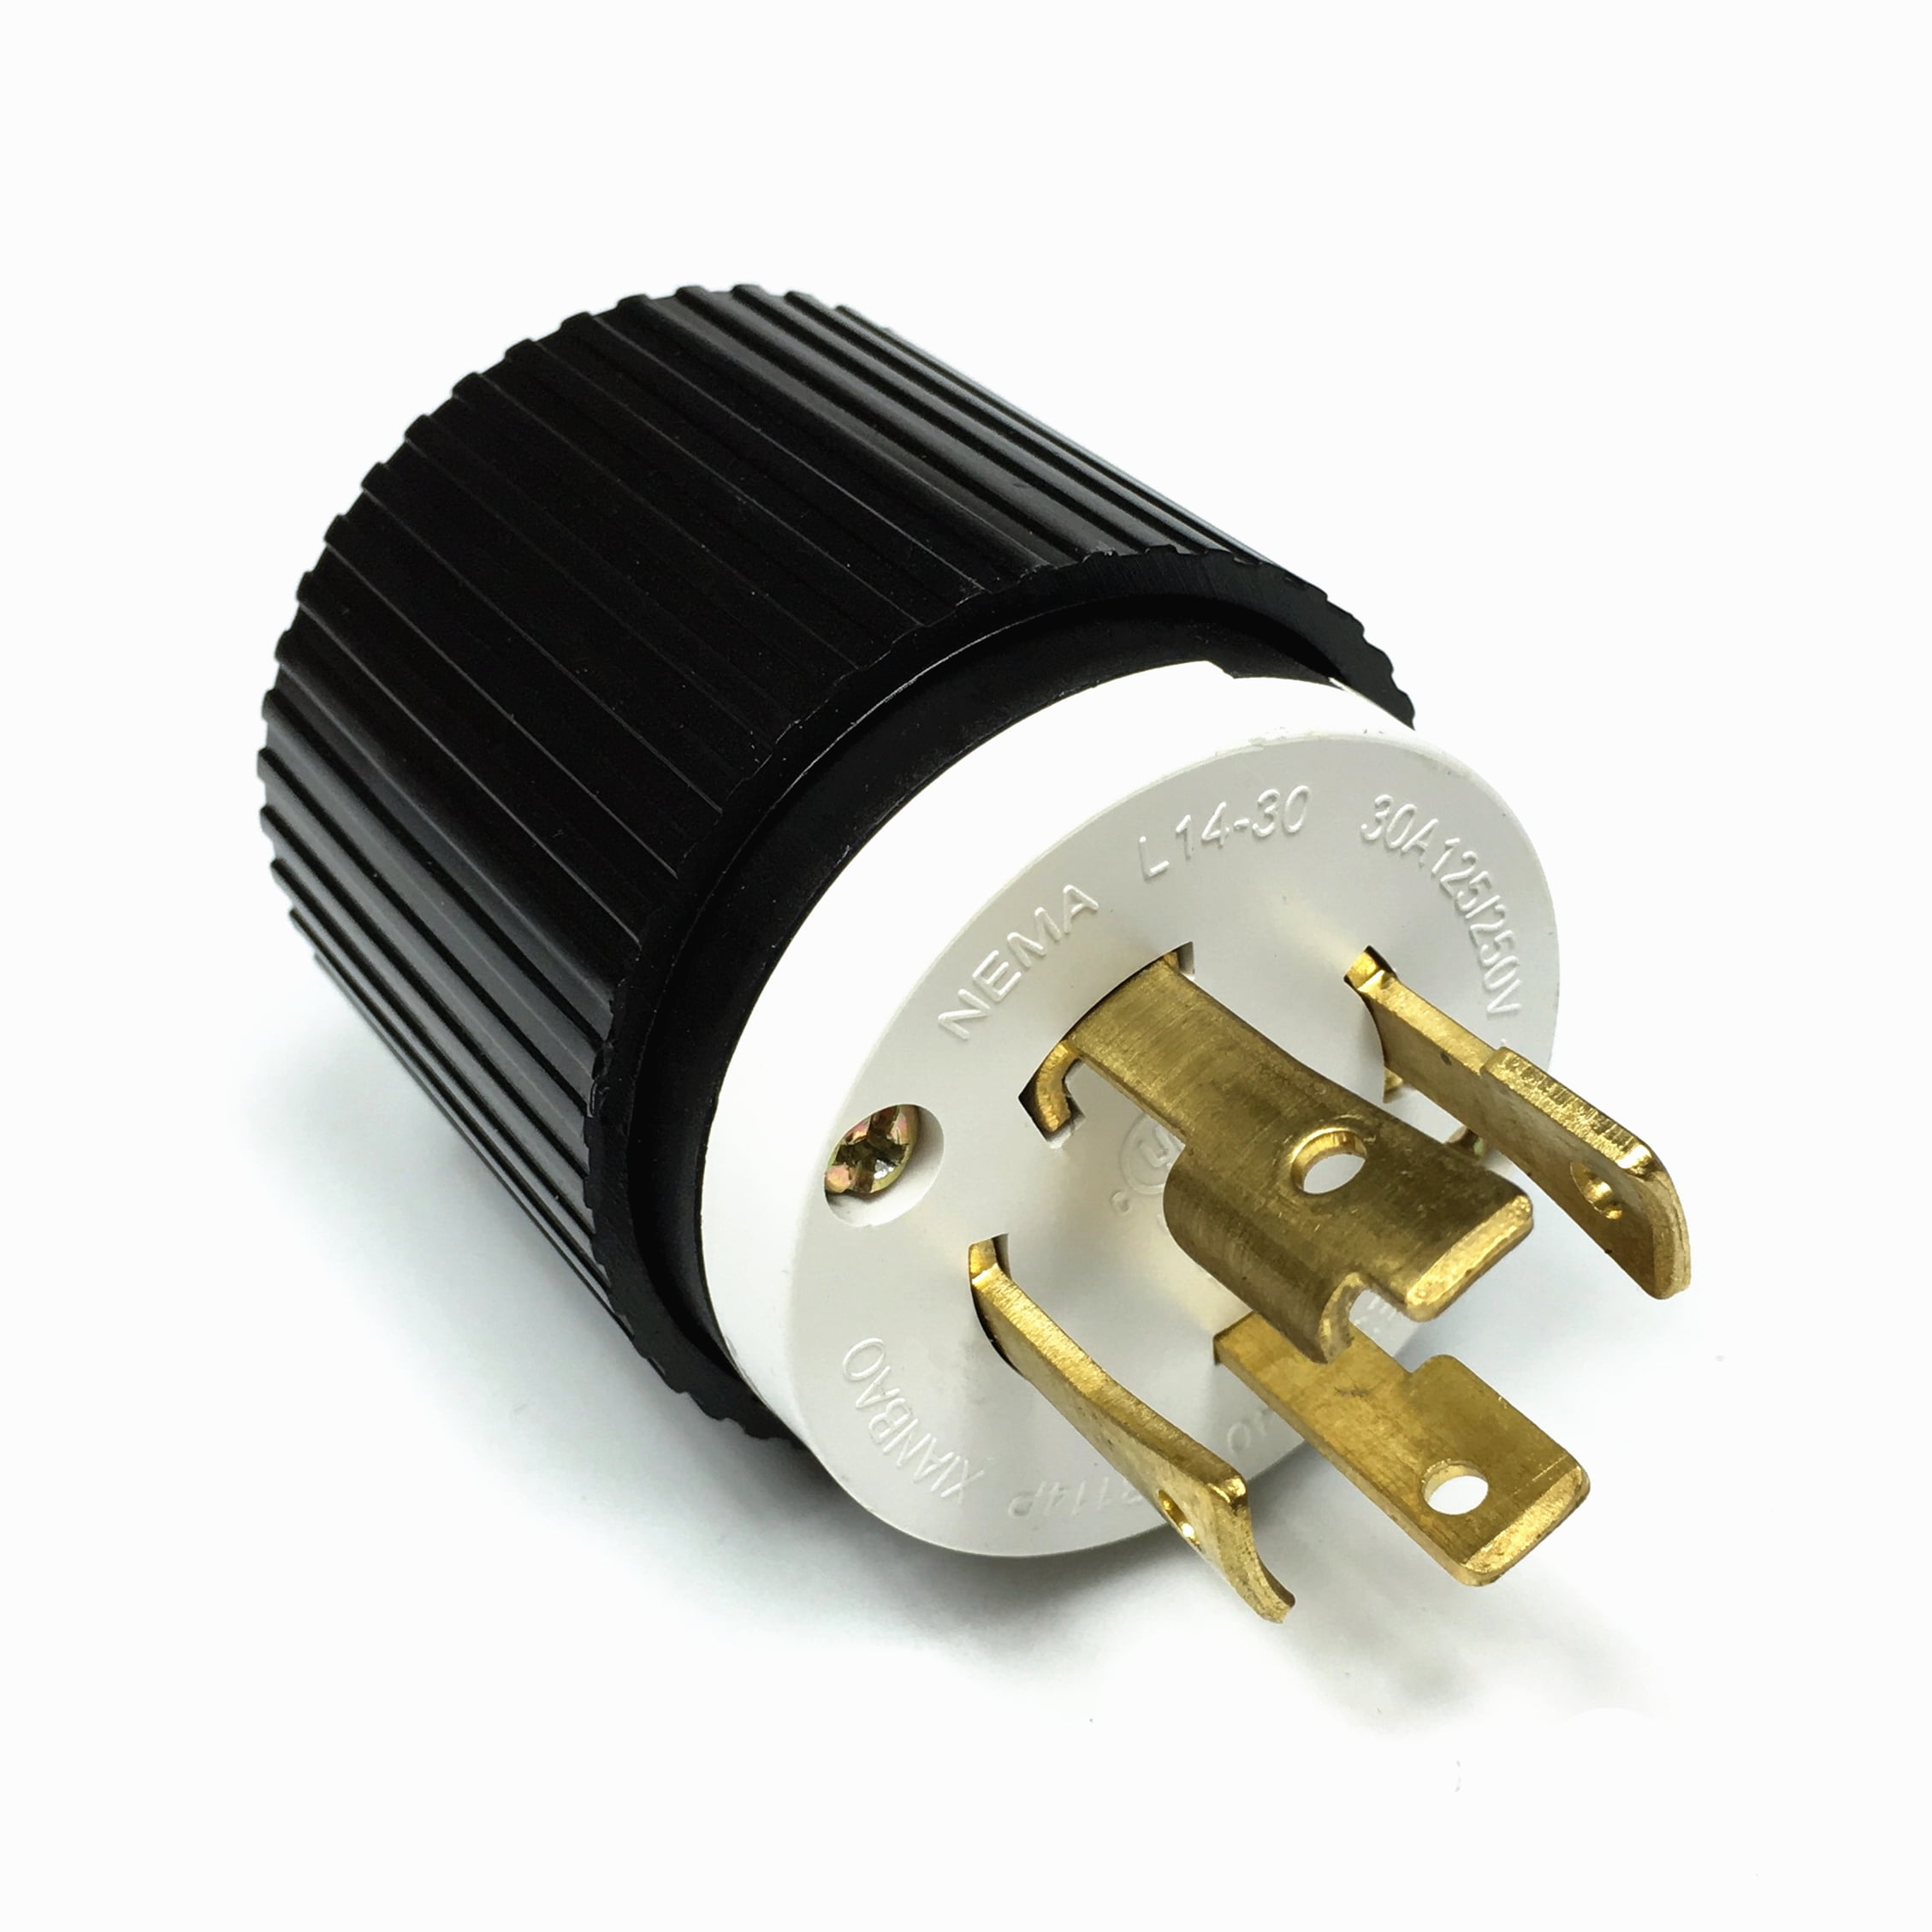 UL Approved L14-30P NEMA 30A 125V-250V Locking Male Plug US Generator Cord 